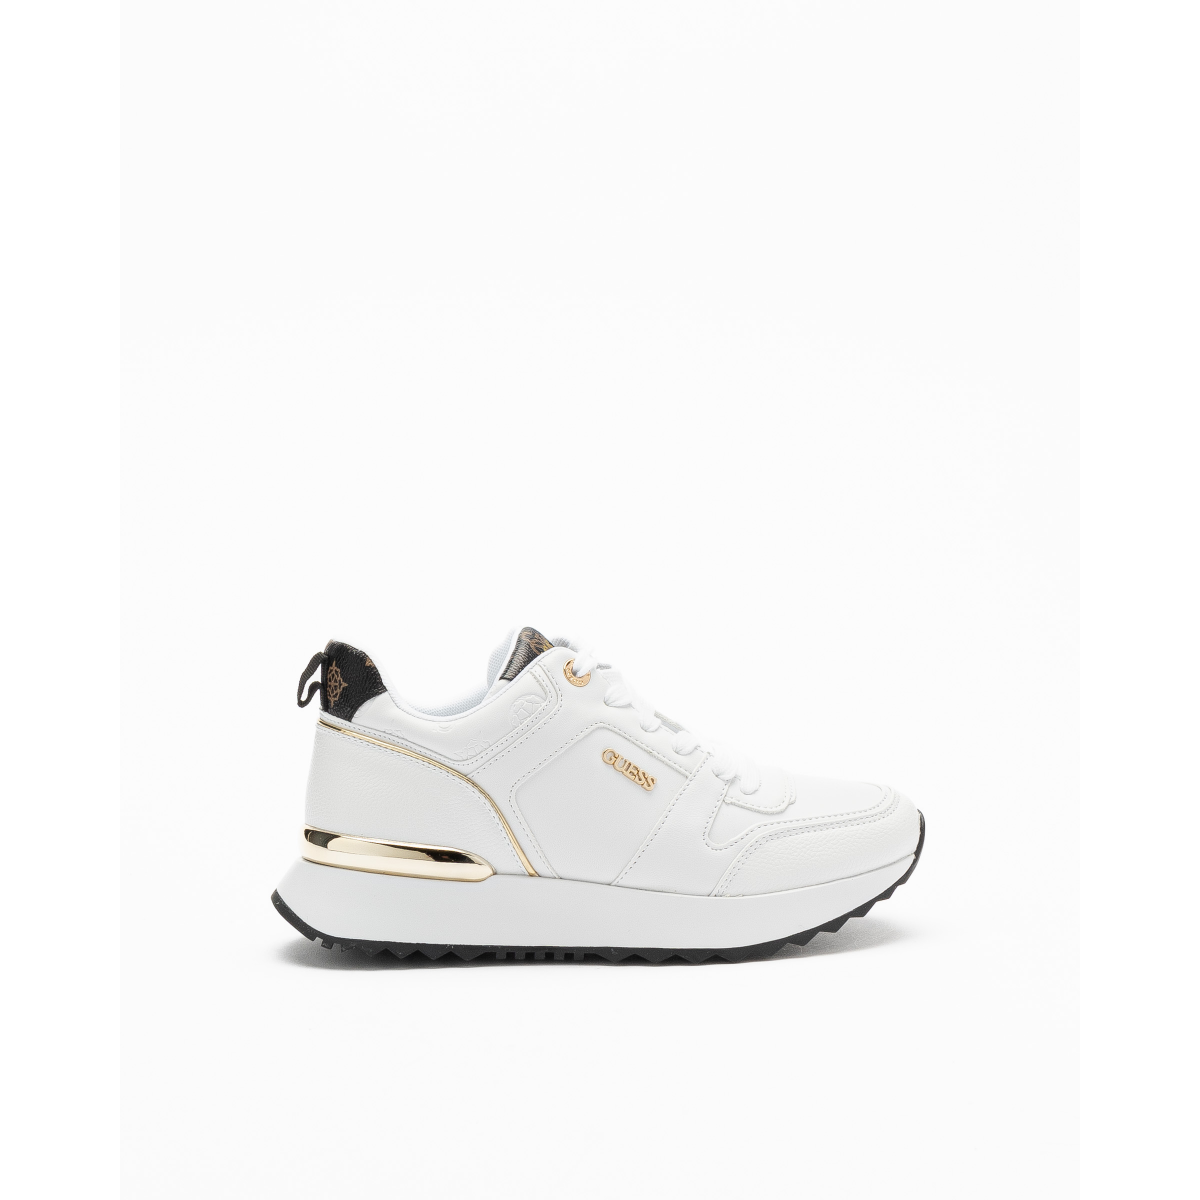 Guess Kaddy White Sneakers - 14-FL8DDY-00 | PROF Online Store